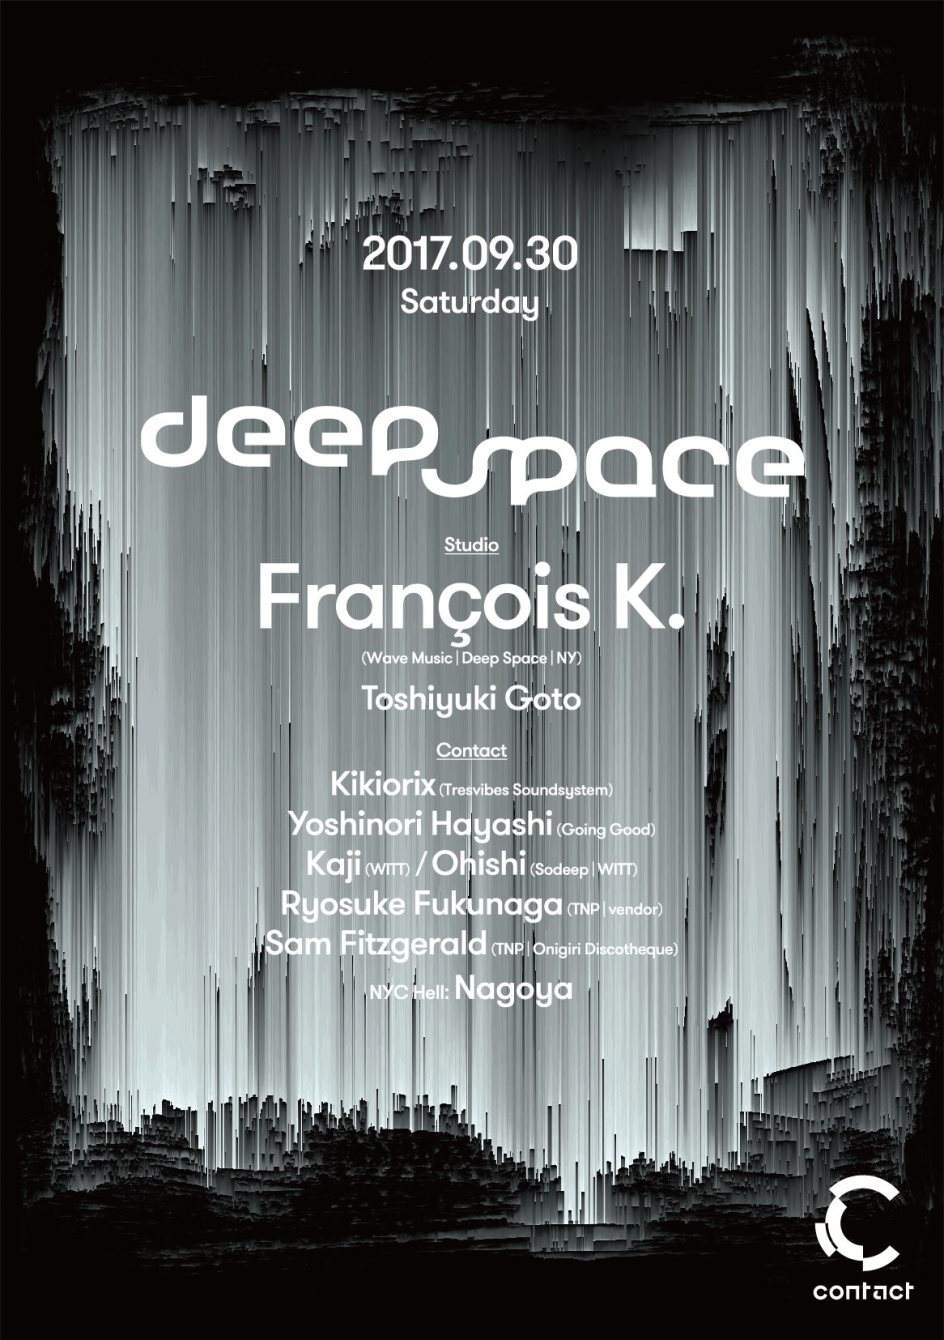 Deep Space -Francois K.- at Contact, Tokyo